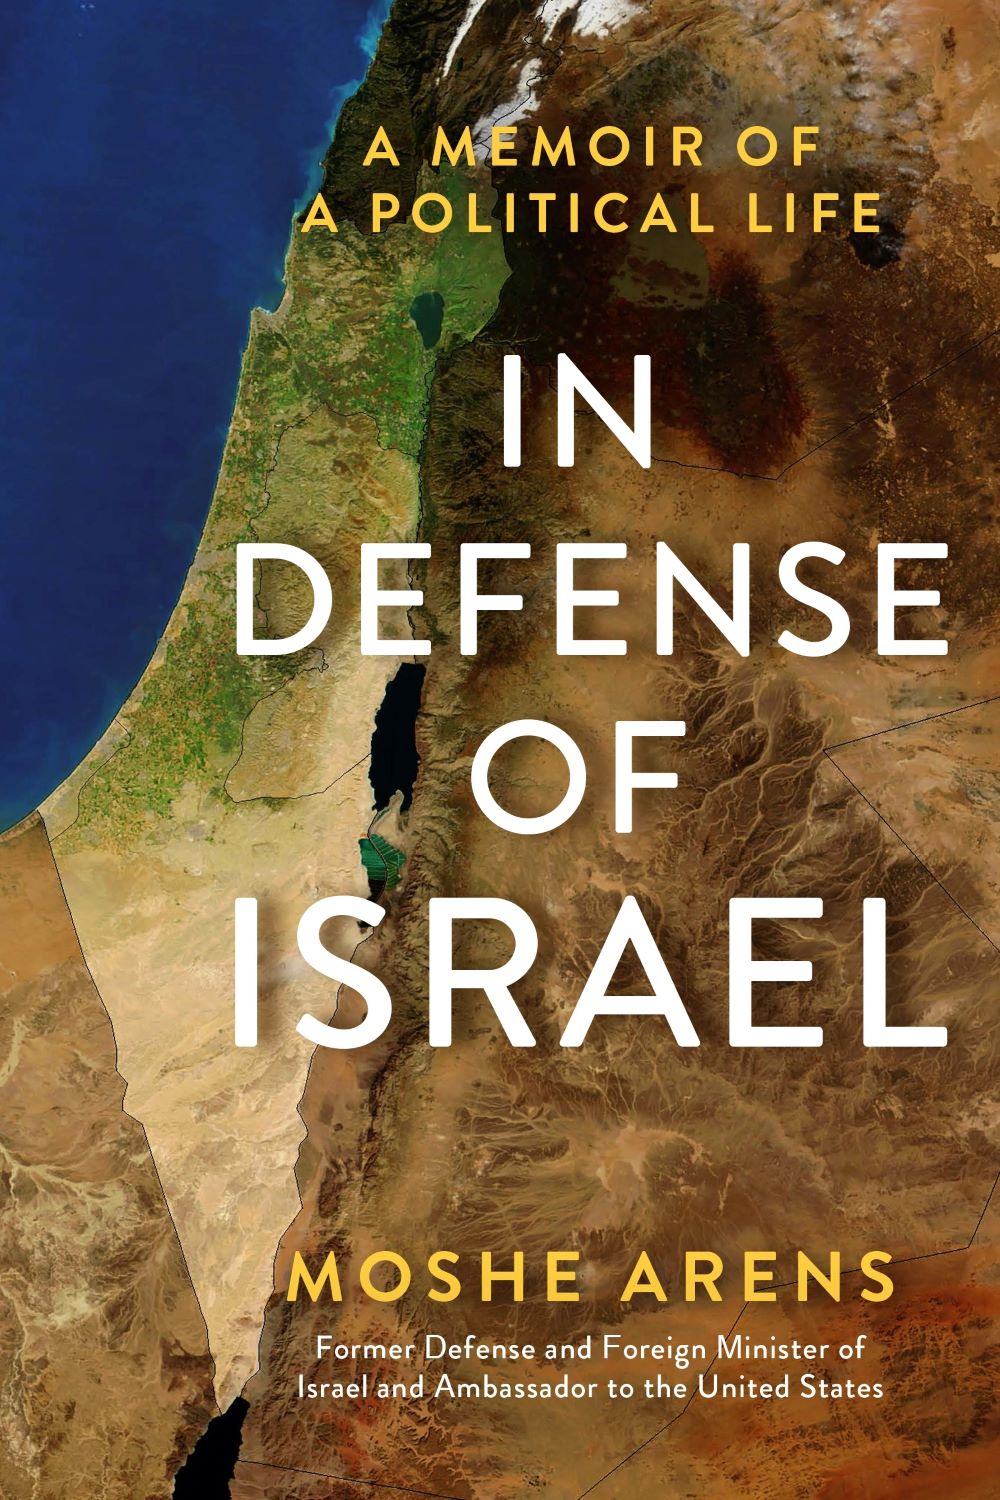 In Defense of Israel by Moshe Arens